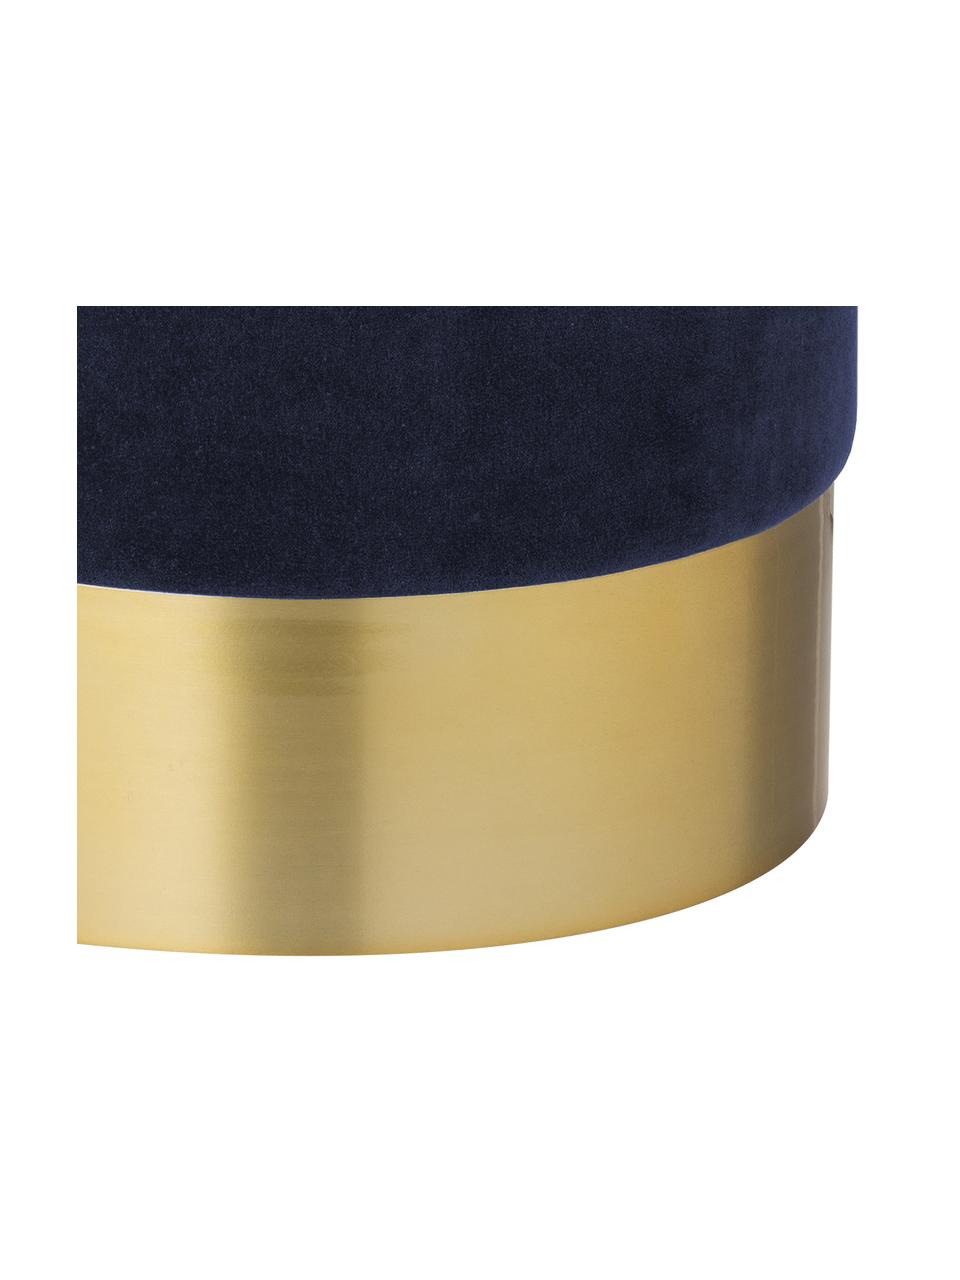 Samt-Hocker Harlow, Bezug: Baumwollsamt, Marineblau, Goldfarben, Ø 38 x H 42 cm